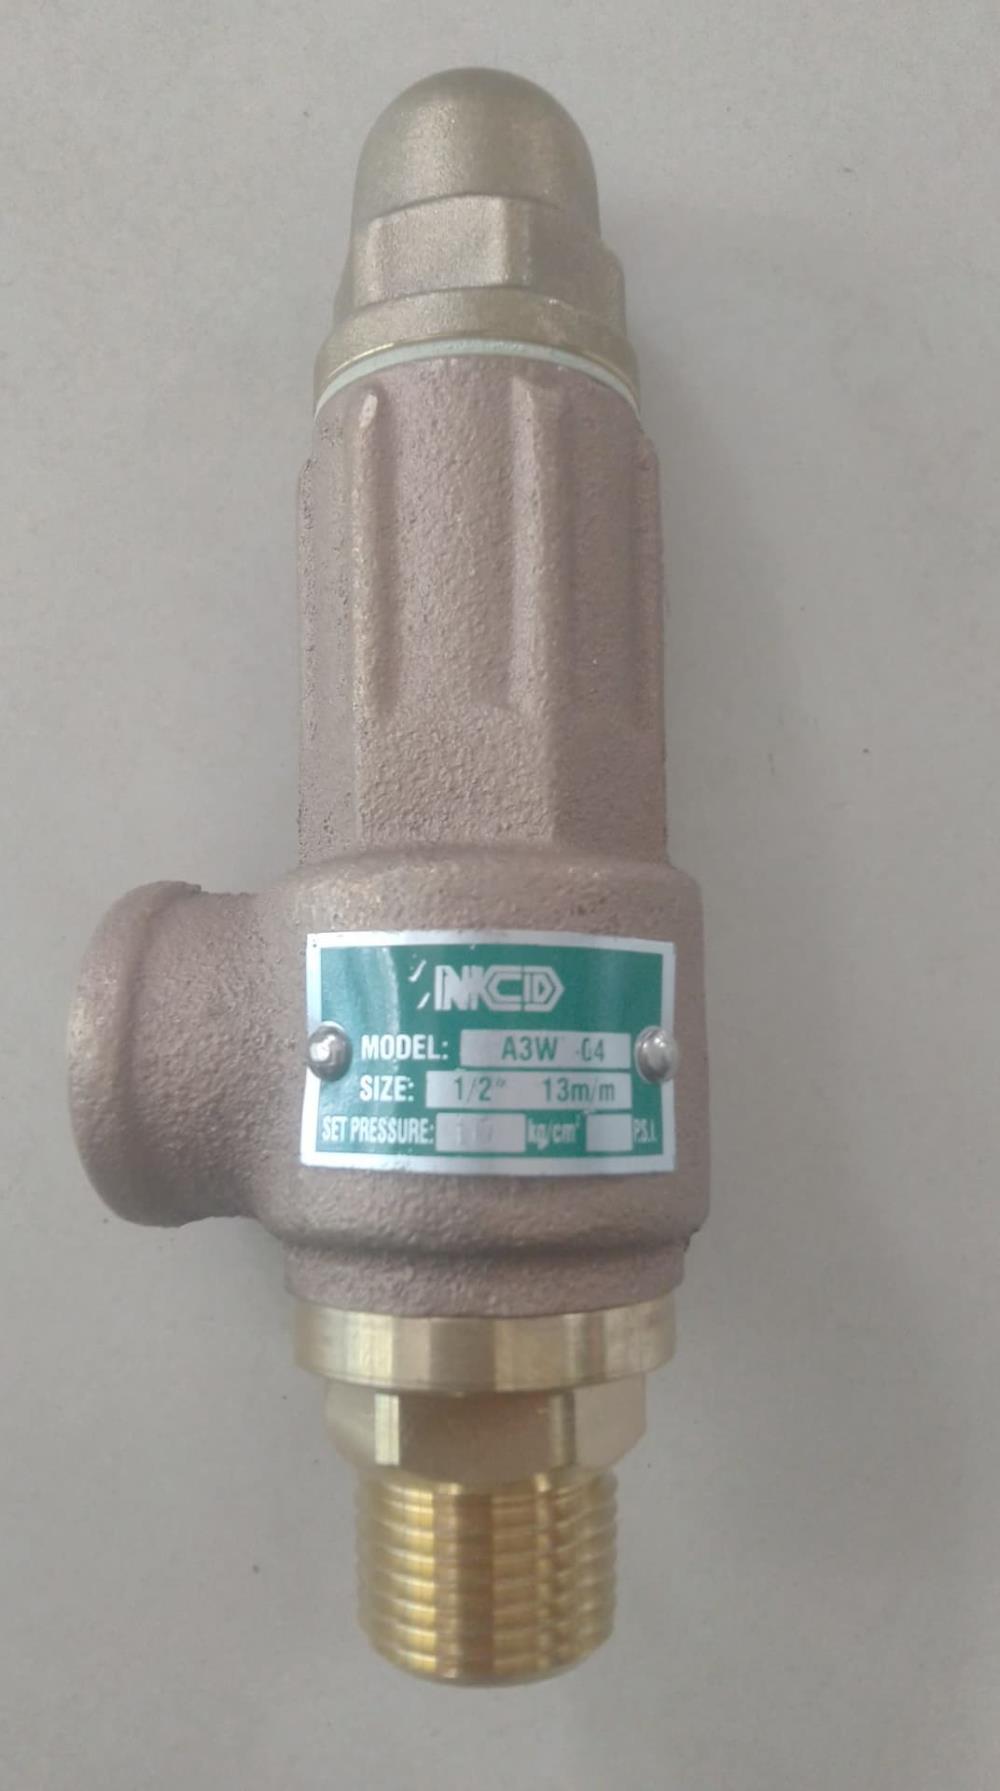 A3W-10-16 Safety relief valve ขนาด 1"ทองเหลือง แบบไม่มีด้าม Pressure 16 bar 240 Psi NCD Korea ส่งฟรีทั่วประเทศ,A3W-10-16 Safety relief valve ขนาด 1"ทองเหลือง แบบไม่มีด้าม,A3W-10-16 Safety relief valve ขนาด 1"ทองเหลือง แบบไม่มีด้าม korea,A3W-10-16 Safety relief valve ขนาด 1"ทองเหลือง แบบไม่มีด้าม,Pumps, Valves and Accessories/Valves/Safety Relief Valve